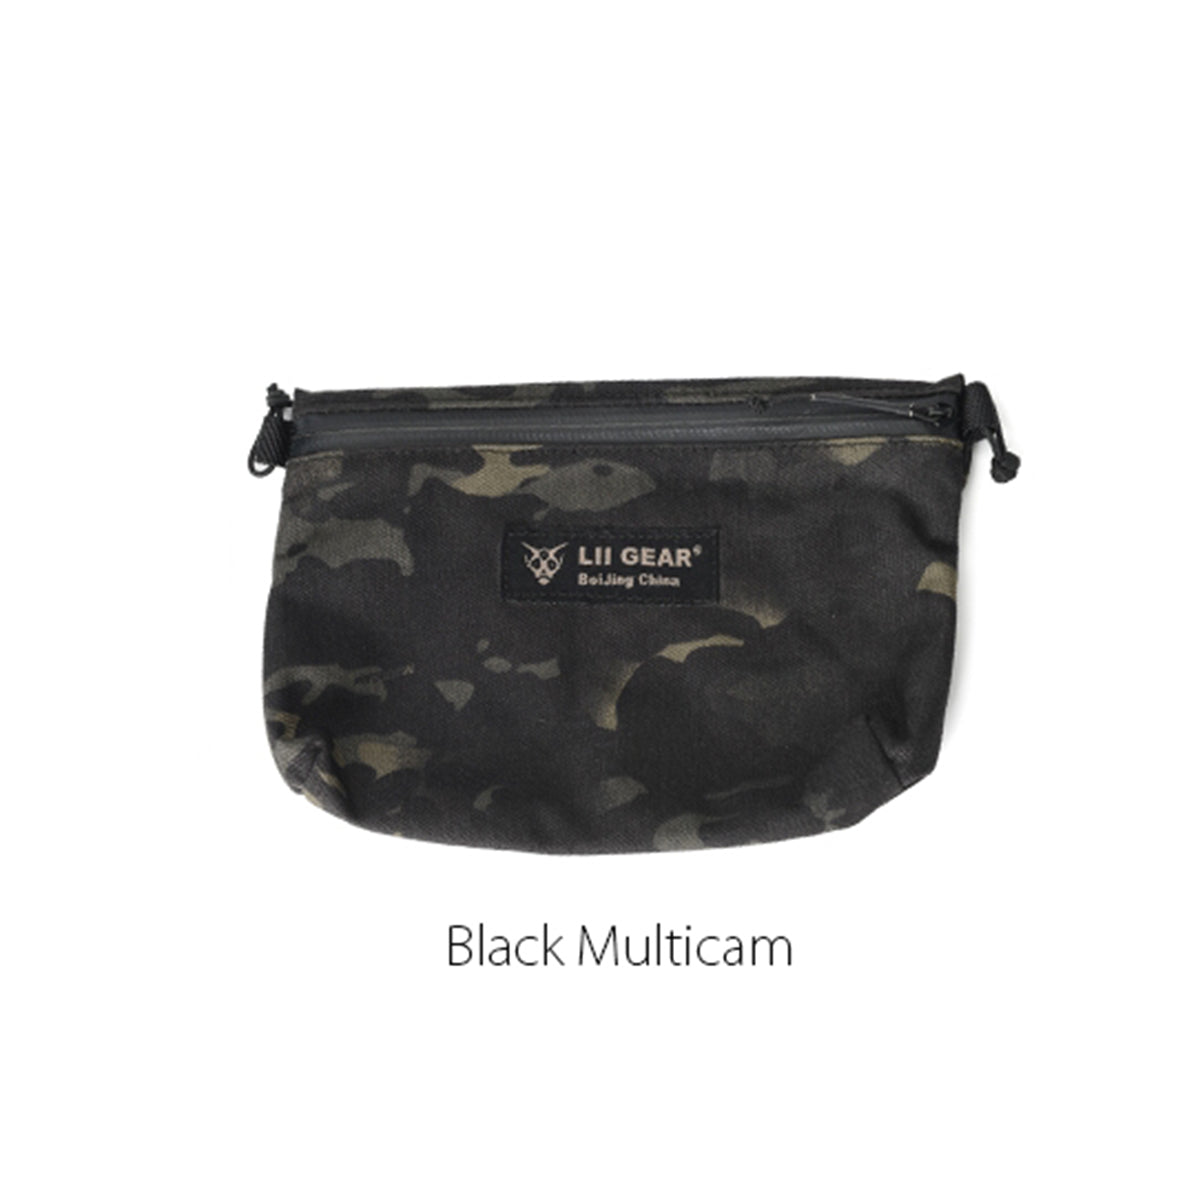 Lii Gear Edc Gear Daily Leisure Portable Miscellaneous Bag Storage Bag Black Multicam